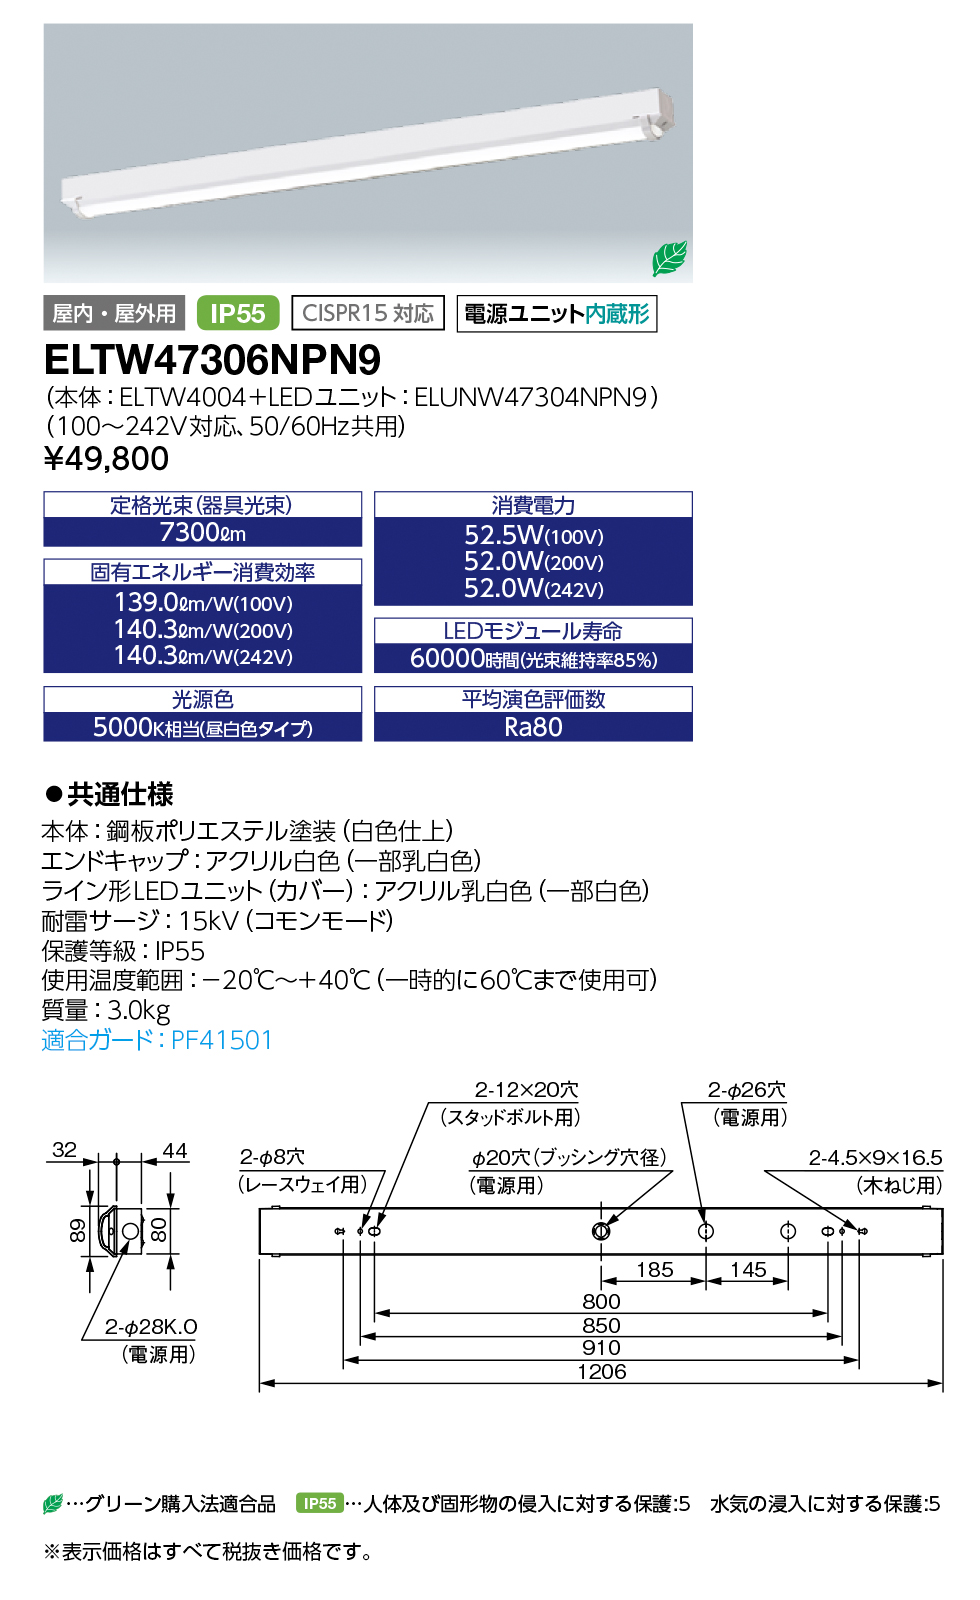 ELTW47306NPN9